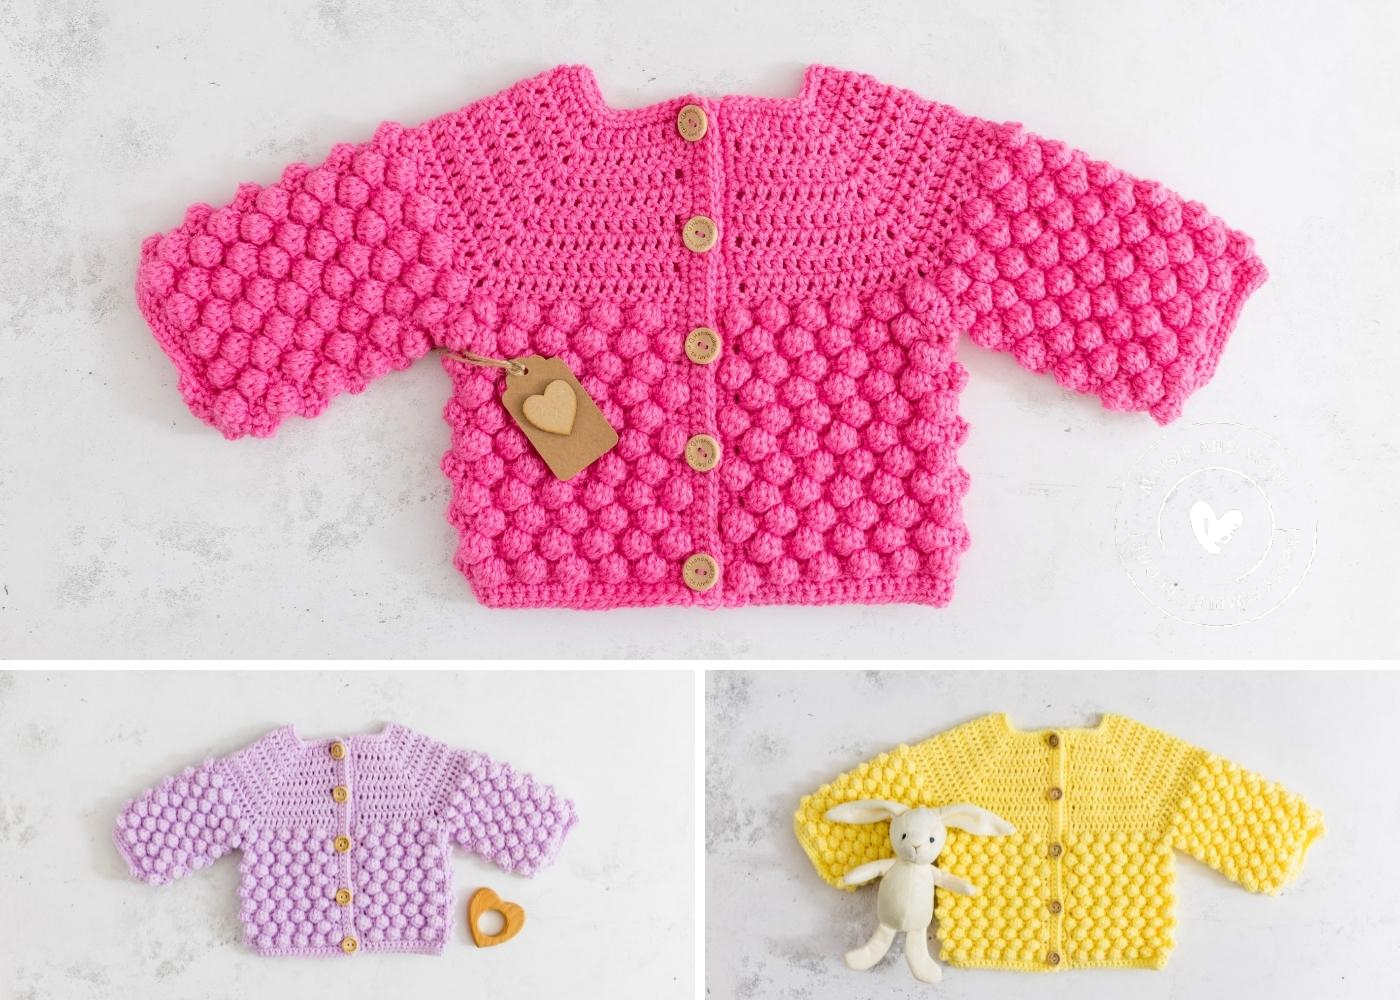 Bobble Crochet Baby Cardigan Pattern collage